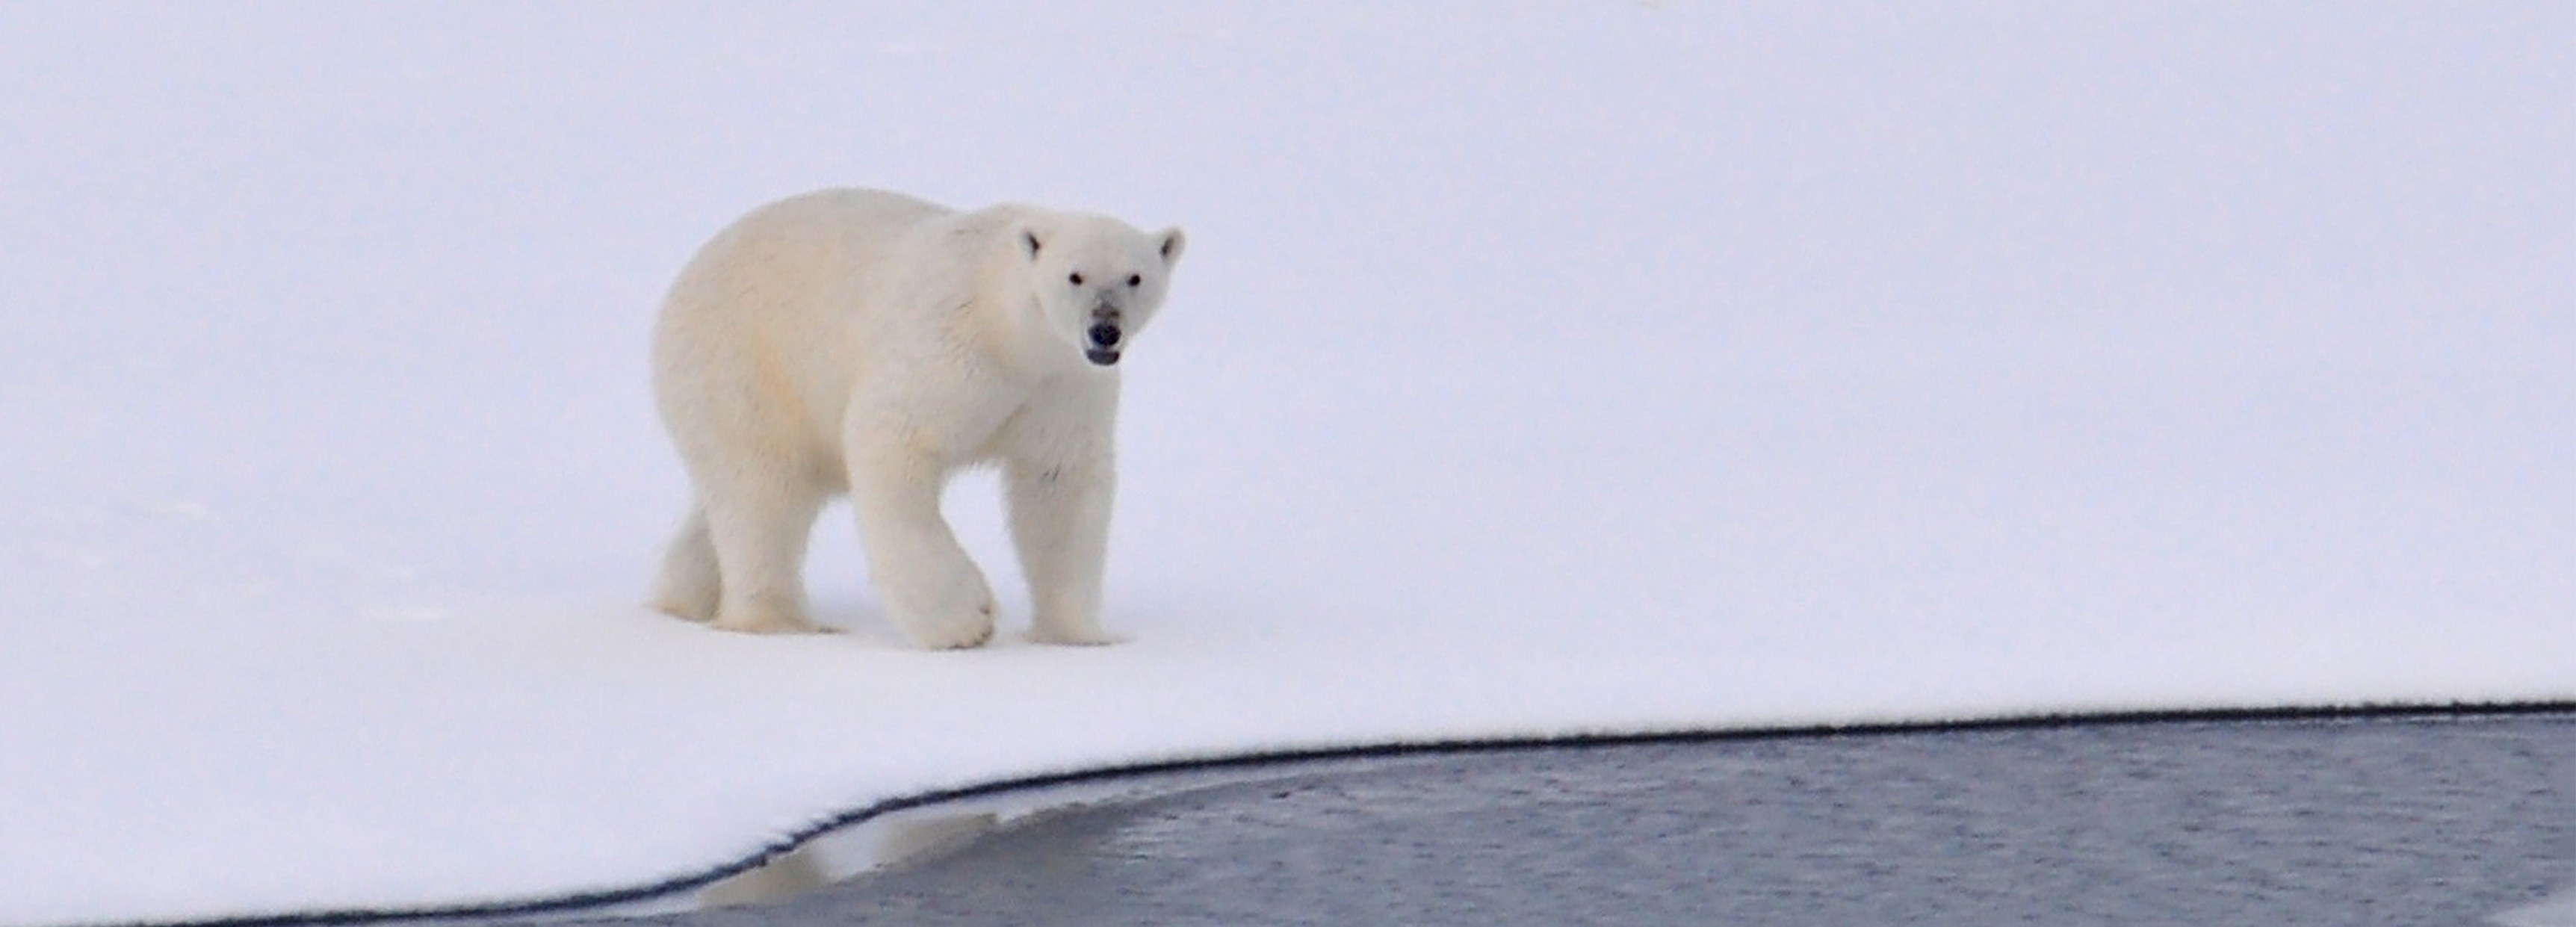 Polar bear water fight | BBC Earth